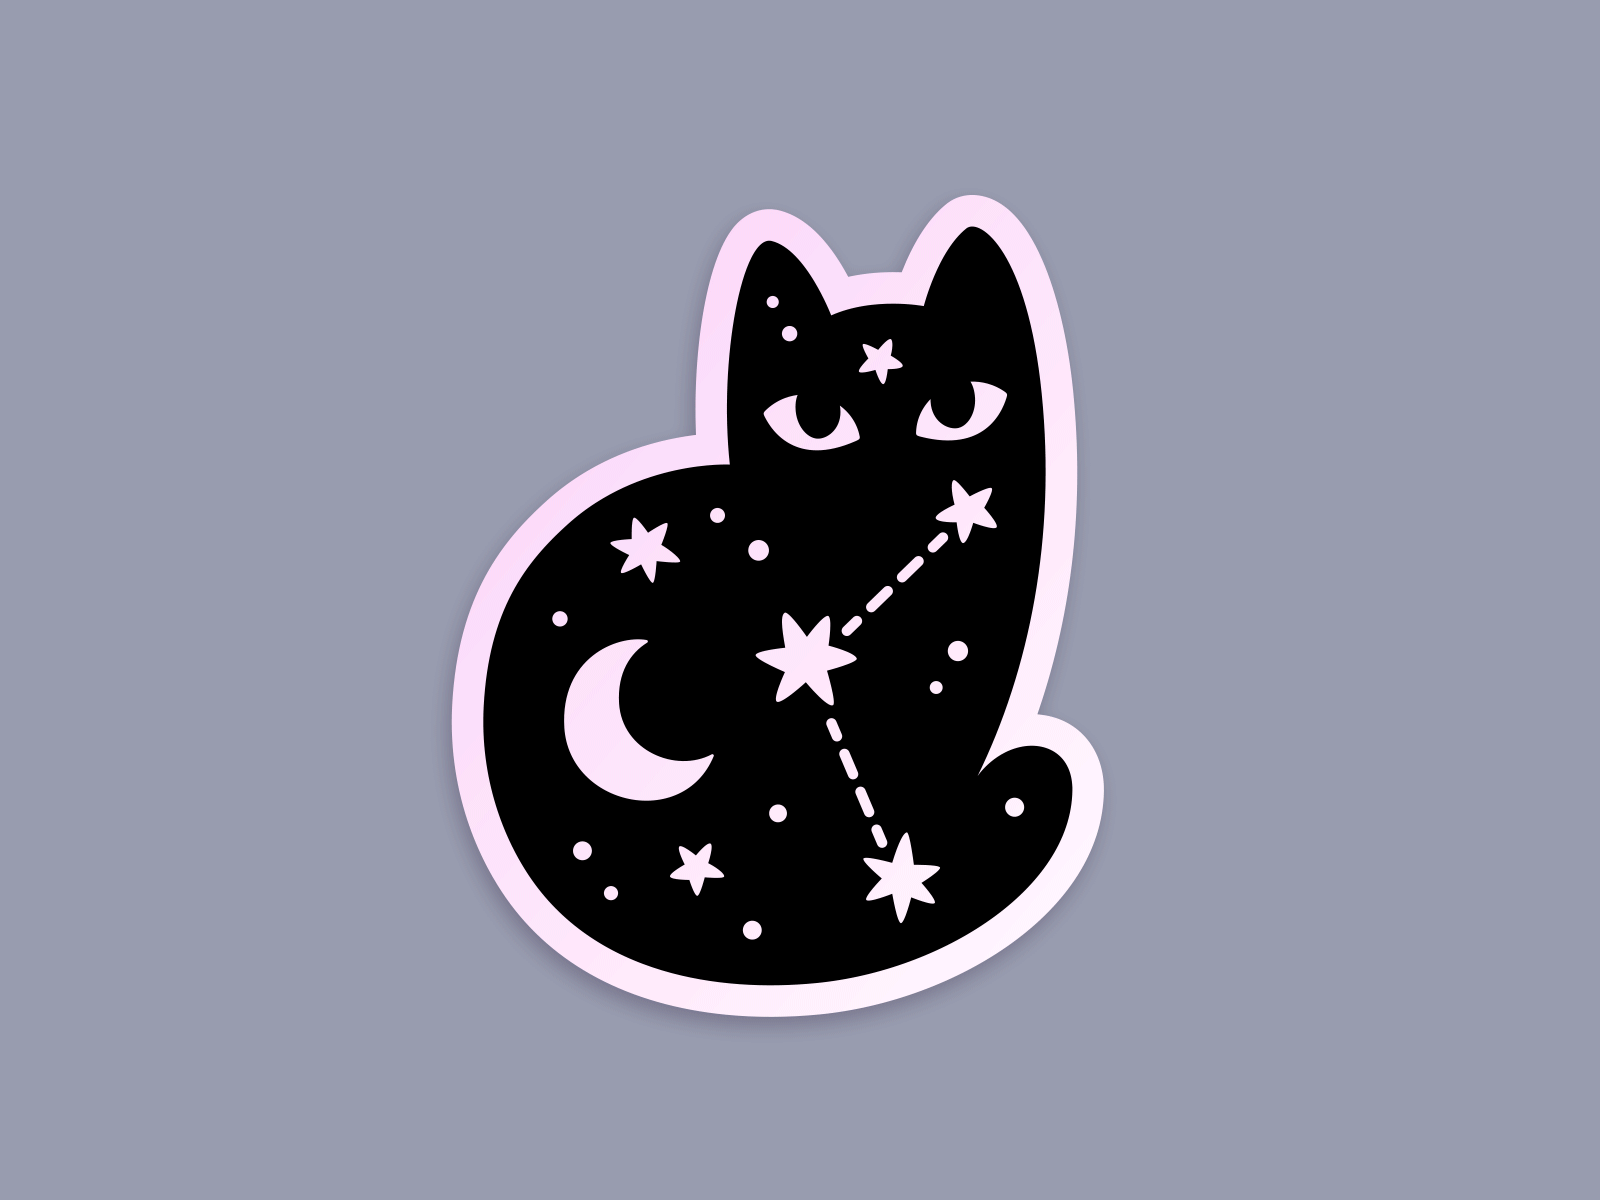 Holo sticker black black cat cat constellation holograpic logo magic night sky stars sticker